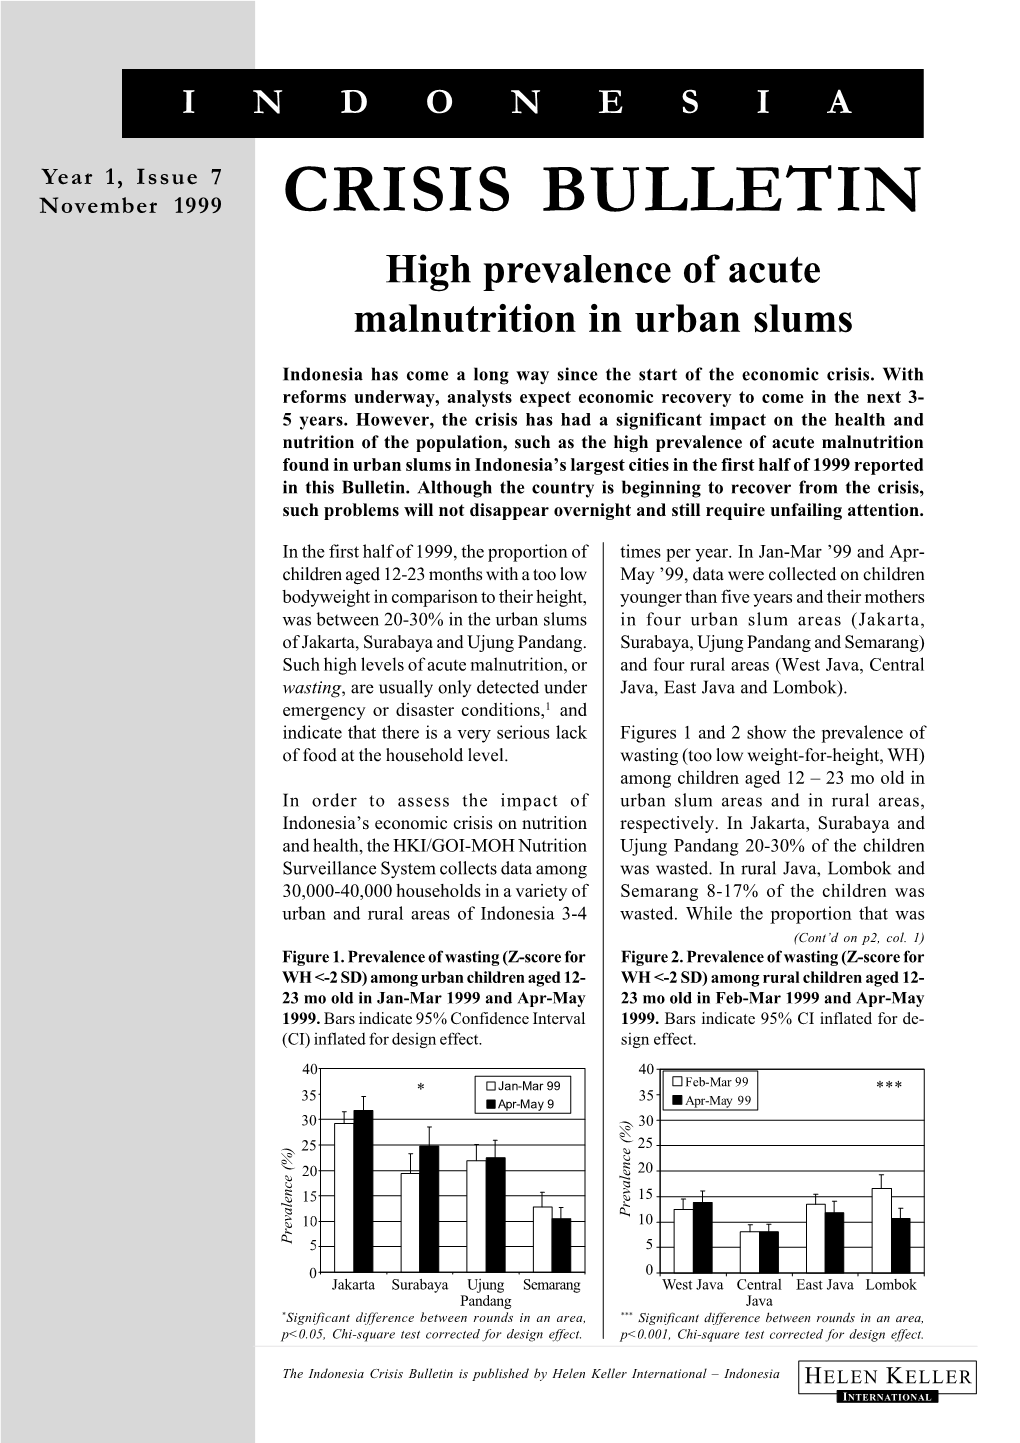 CRISIS BULLETIN High Prevalence of Acute Malnutrition in Urban Slums